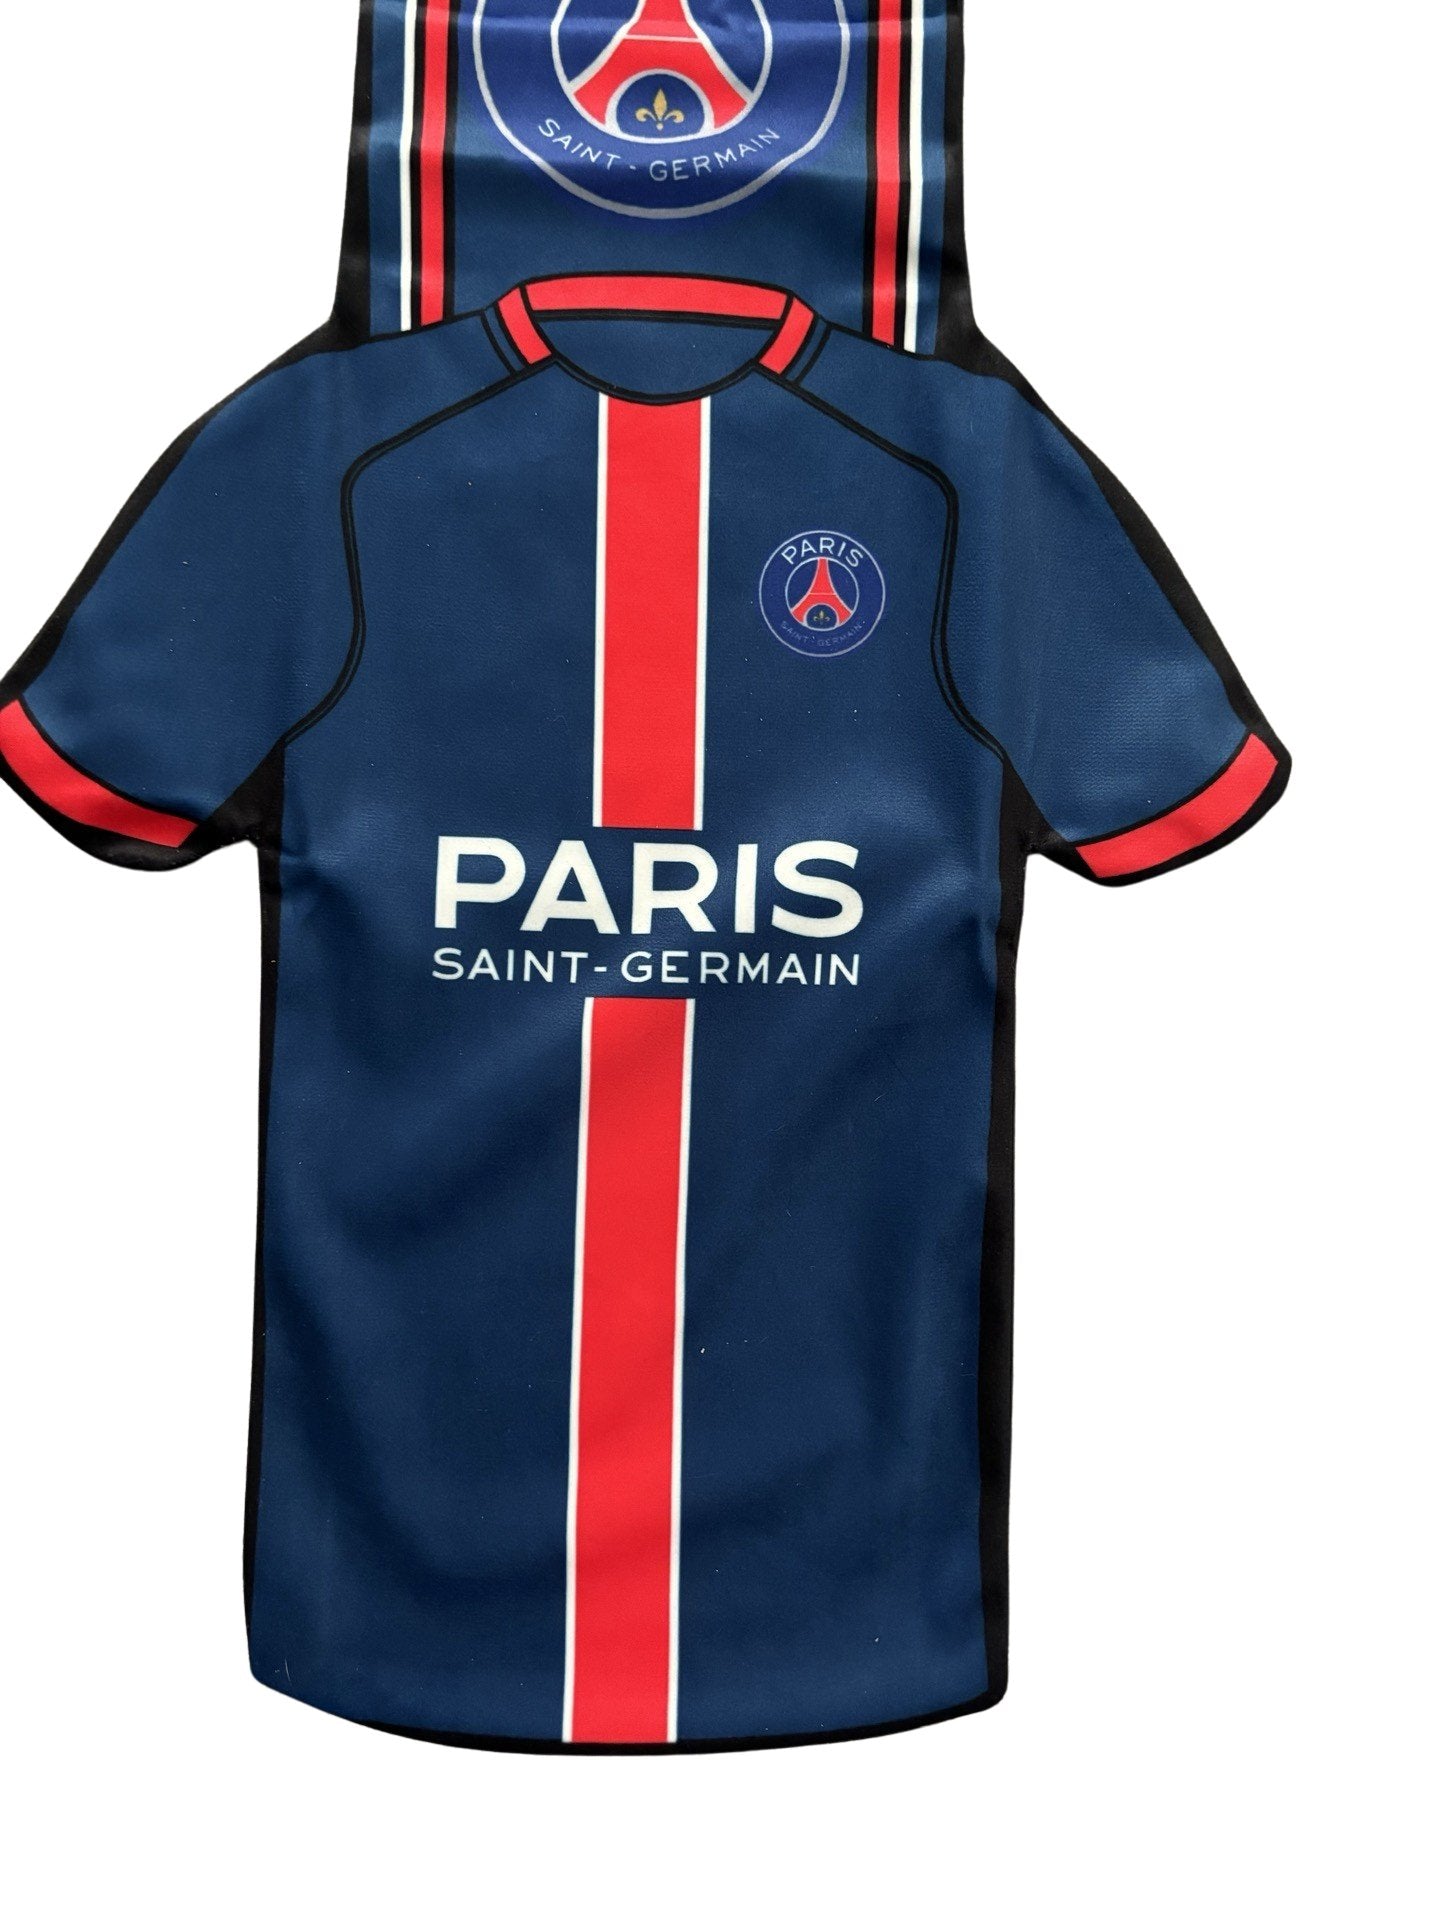 Paris Saint Germain Football Scarf Jersey Shirt Scarf - Soul and Sense Streetwear